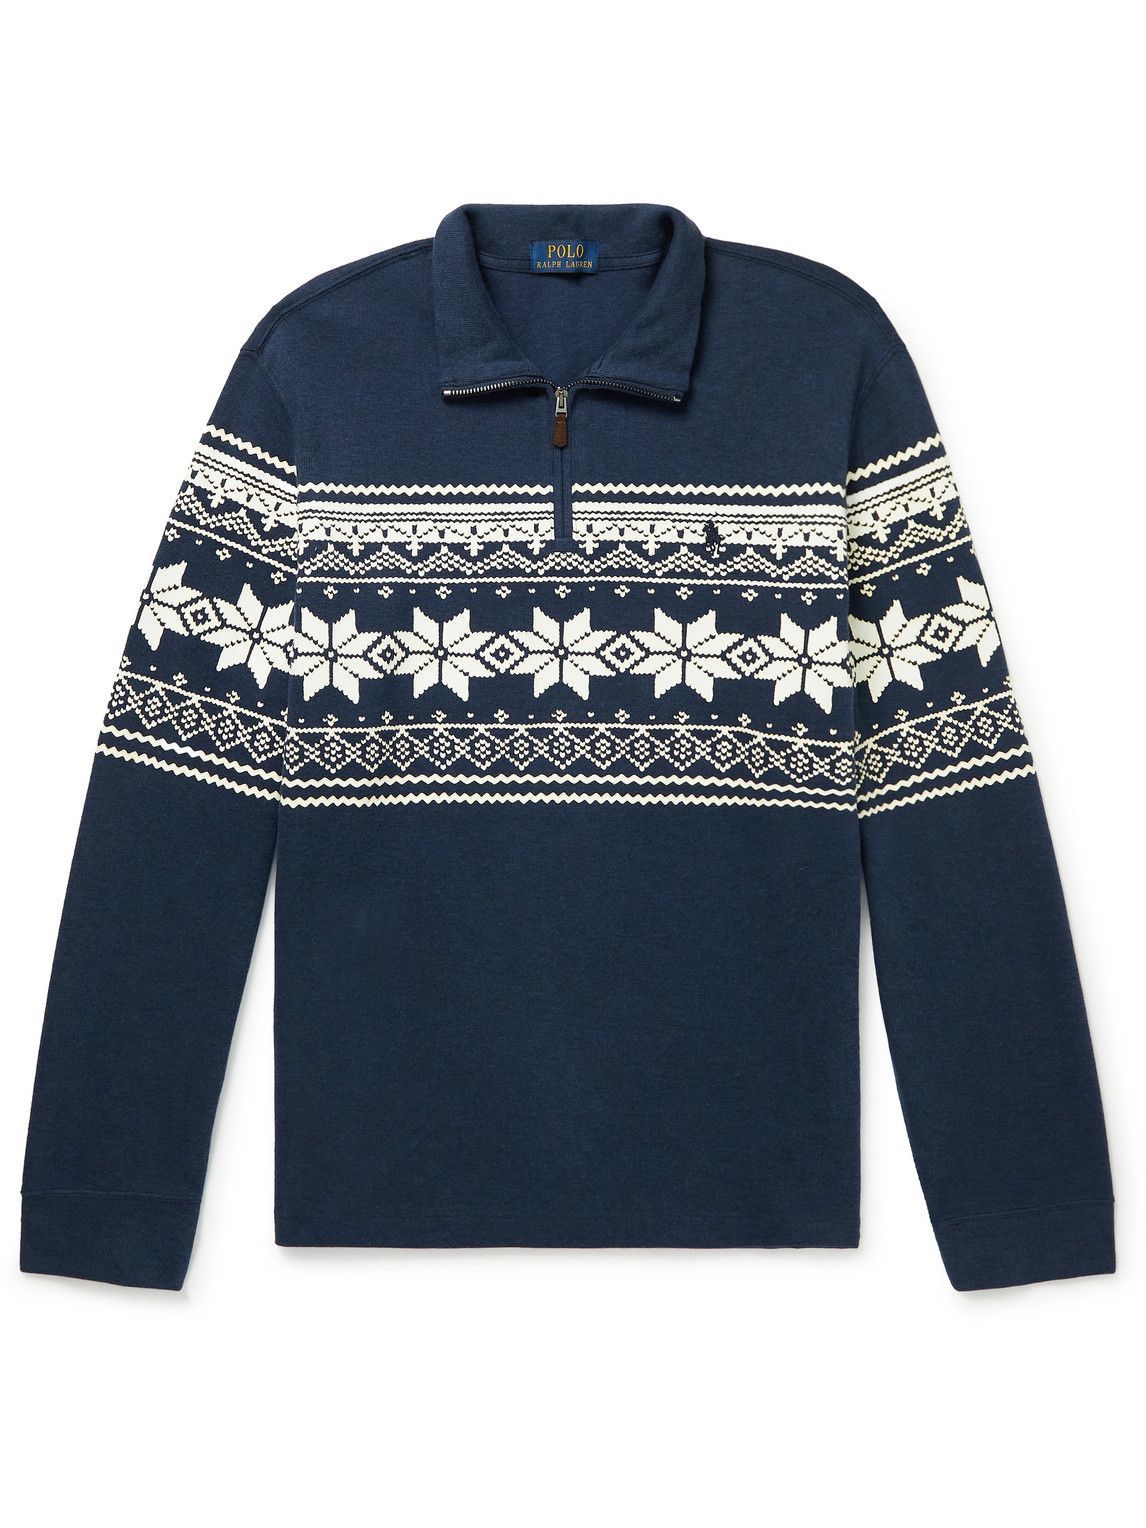 Polo Ralph Lauren - Fair Isle Half-Zip Cotton Sweater - Blue